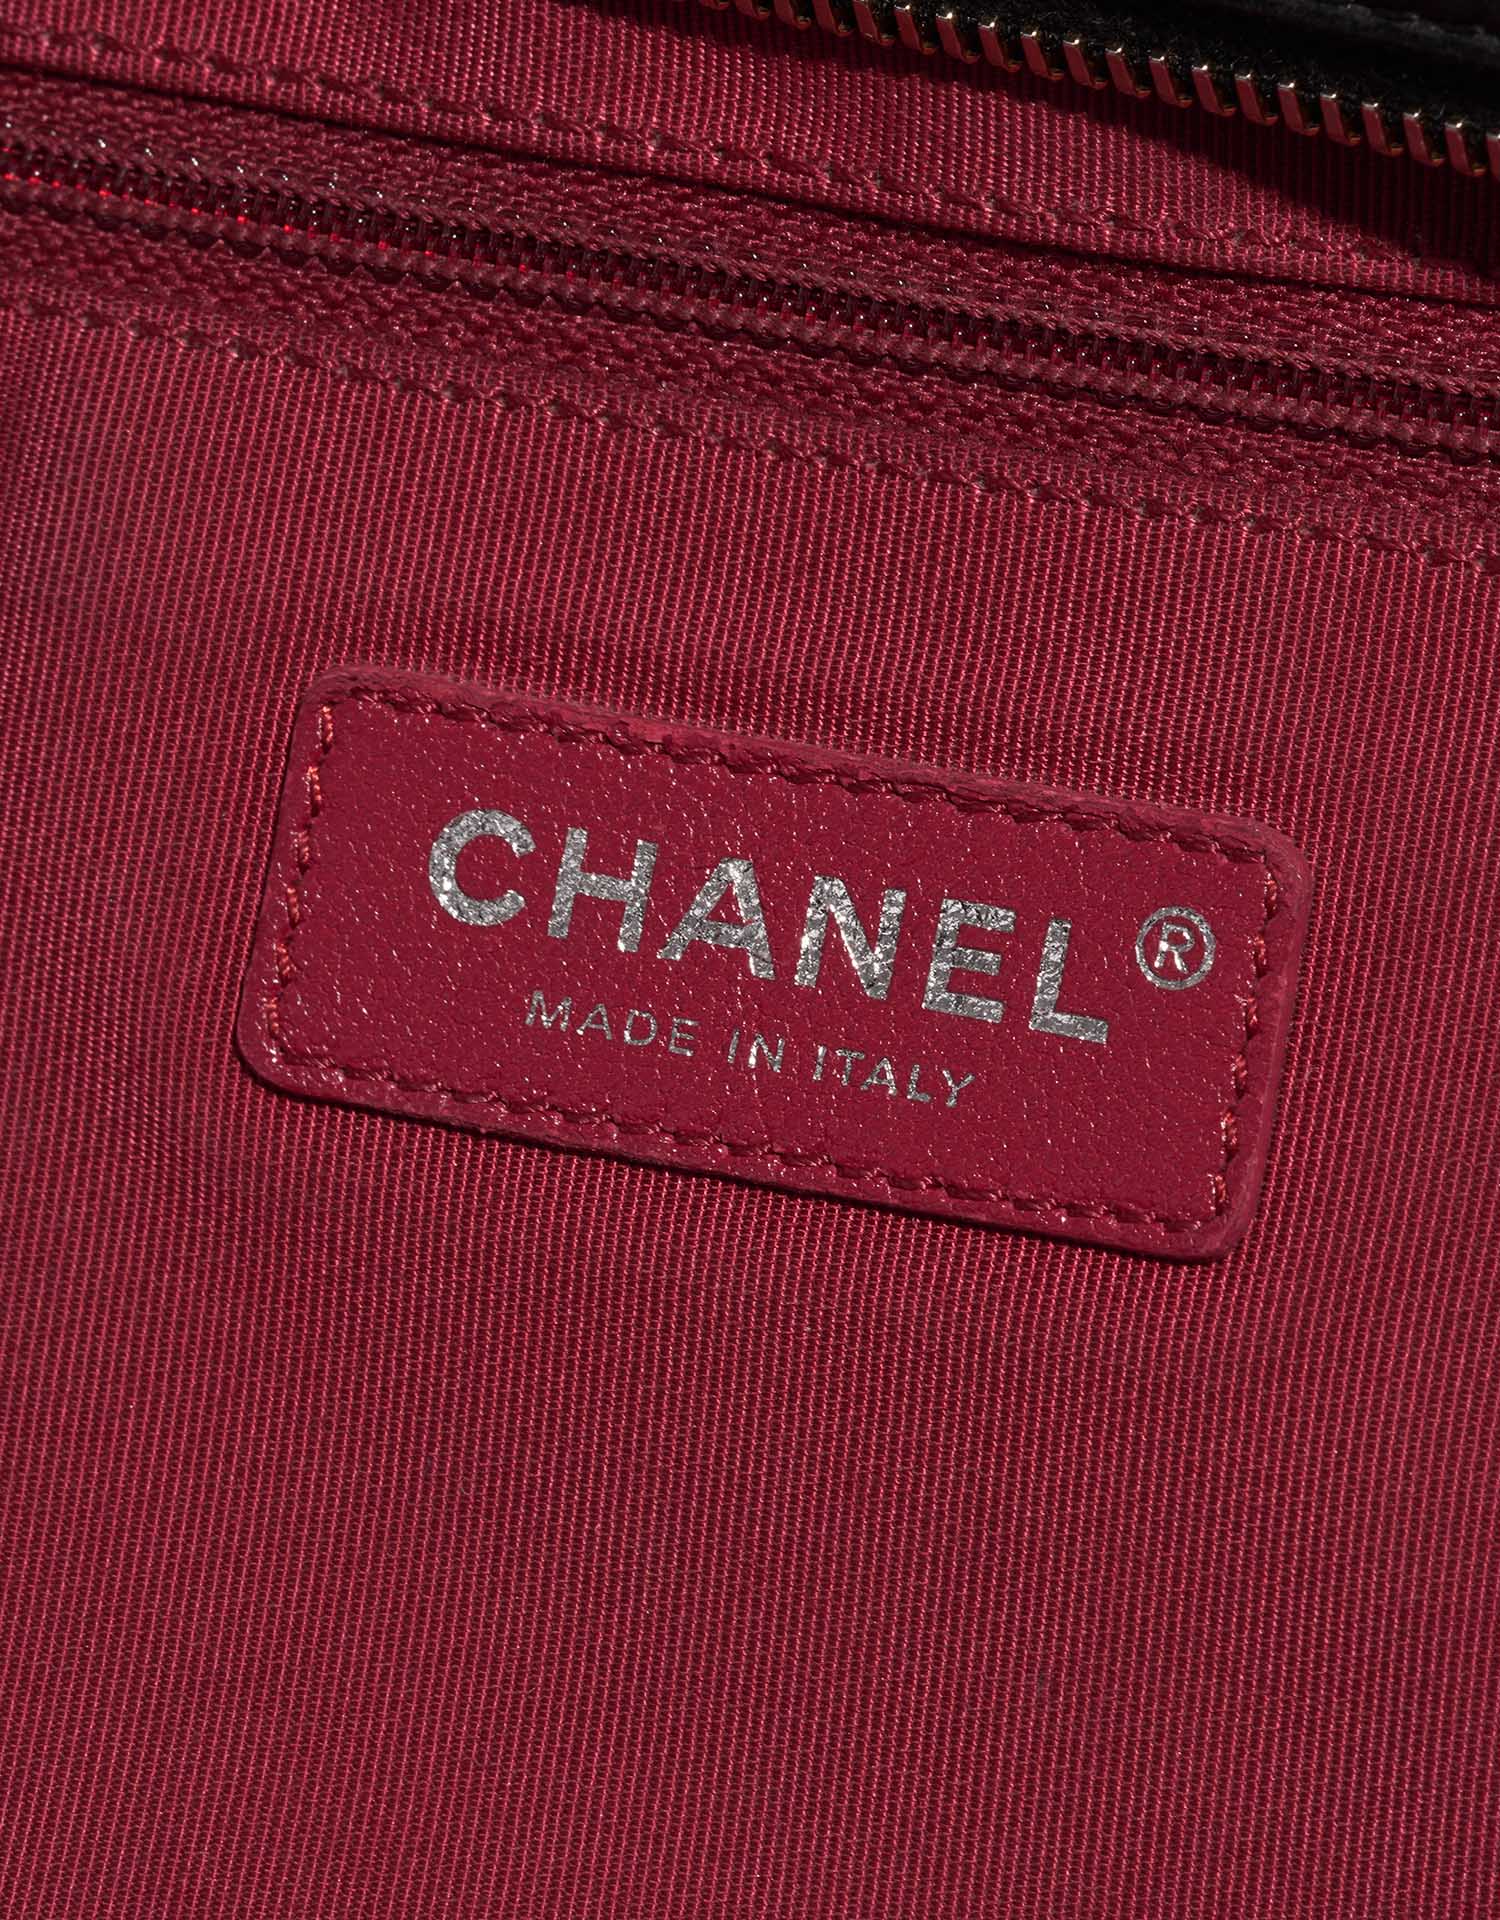 Pre-owned Chanel bag Gabrielle Large Calf Black Black Logo | Sell your designer bag on Saclab.com